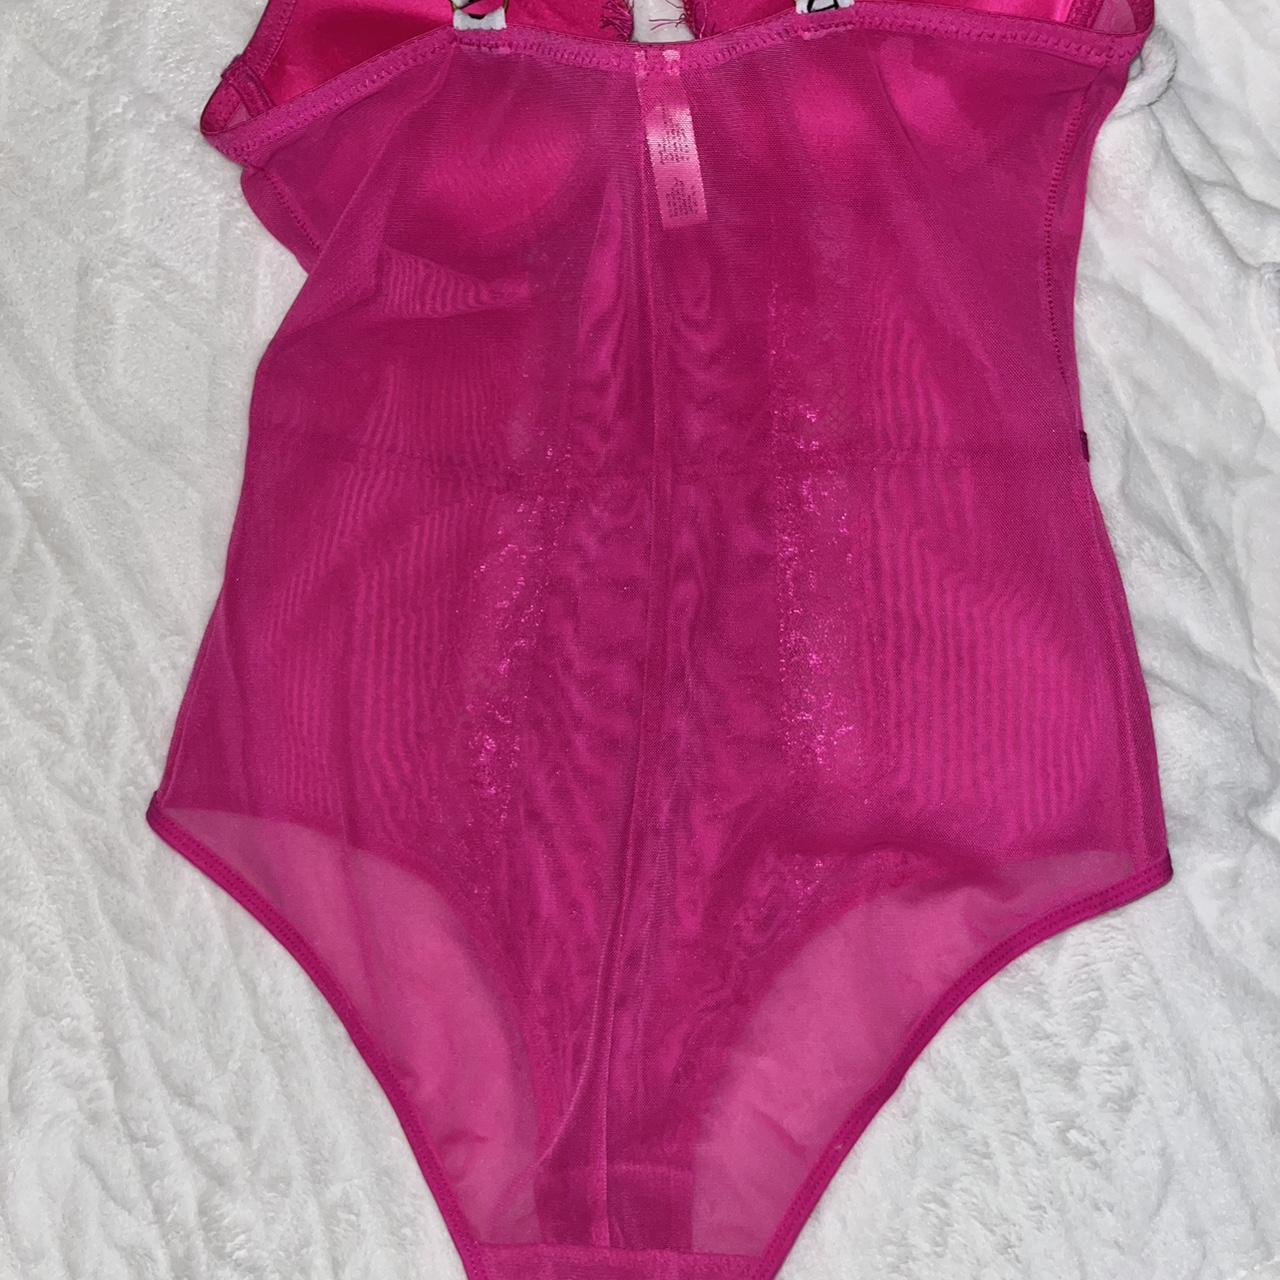 Lounge intimates lace pink bodysuit. Size XS would - Depop